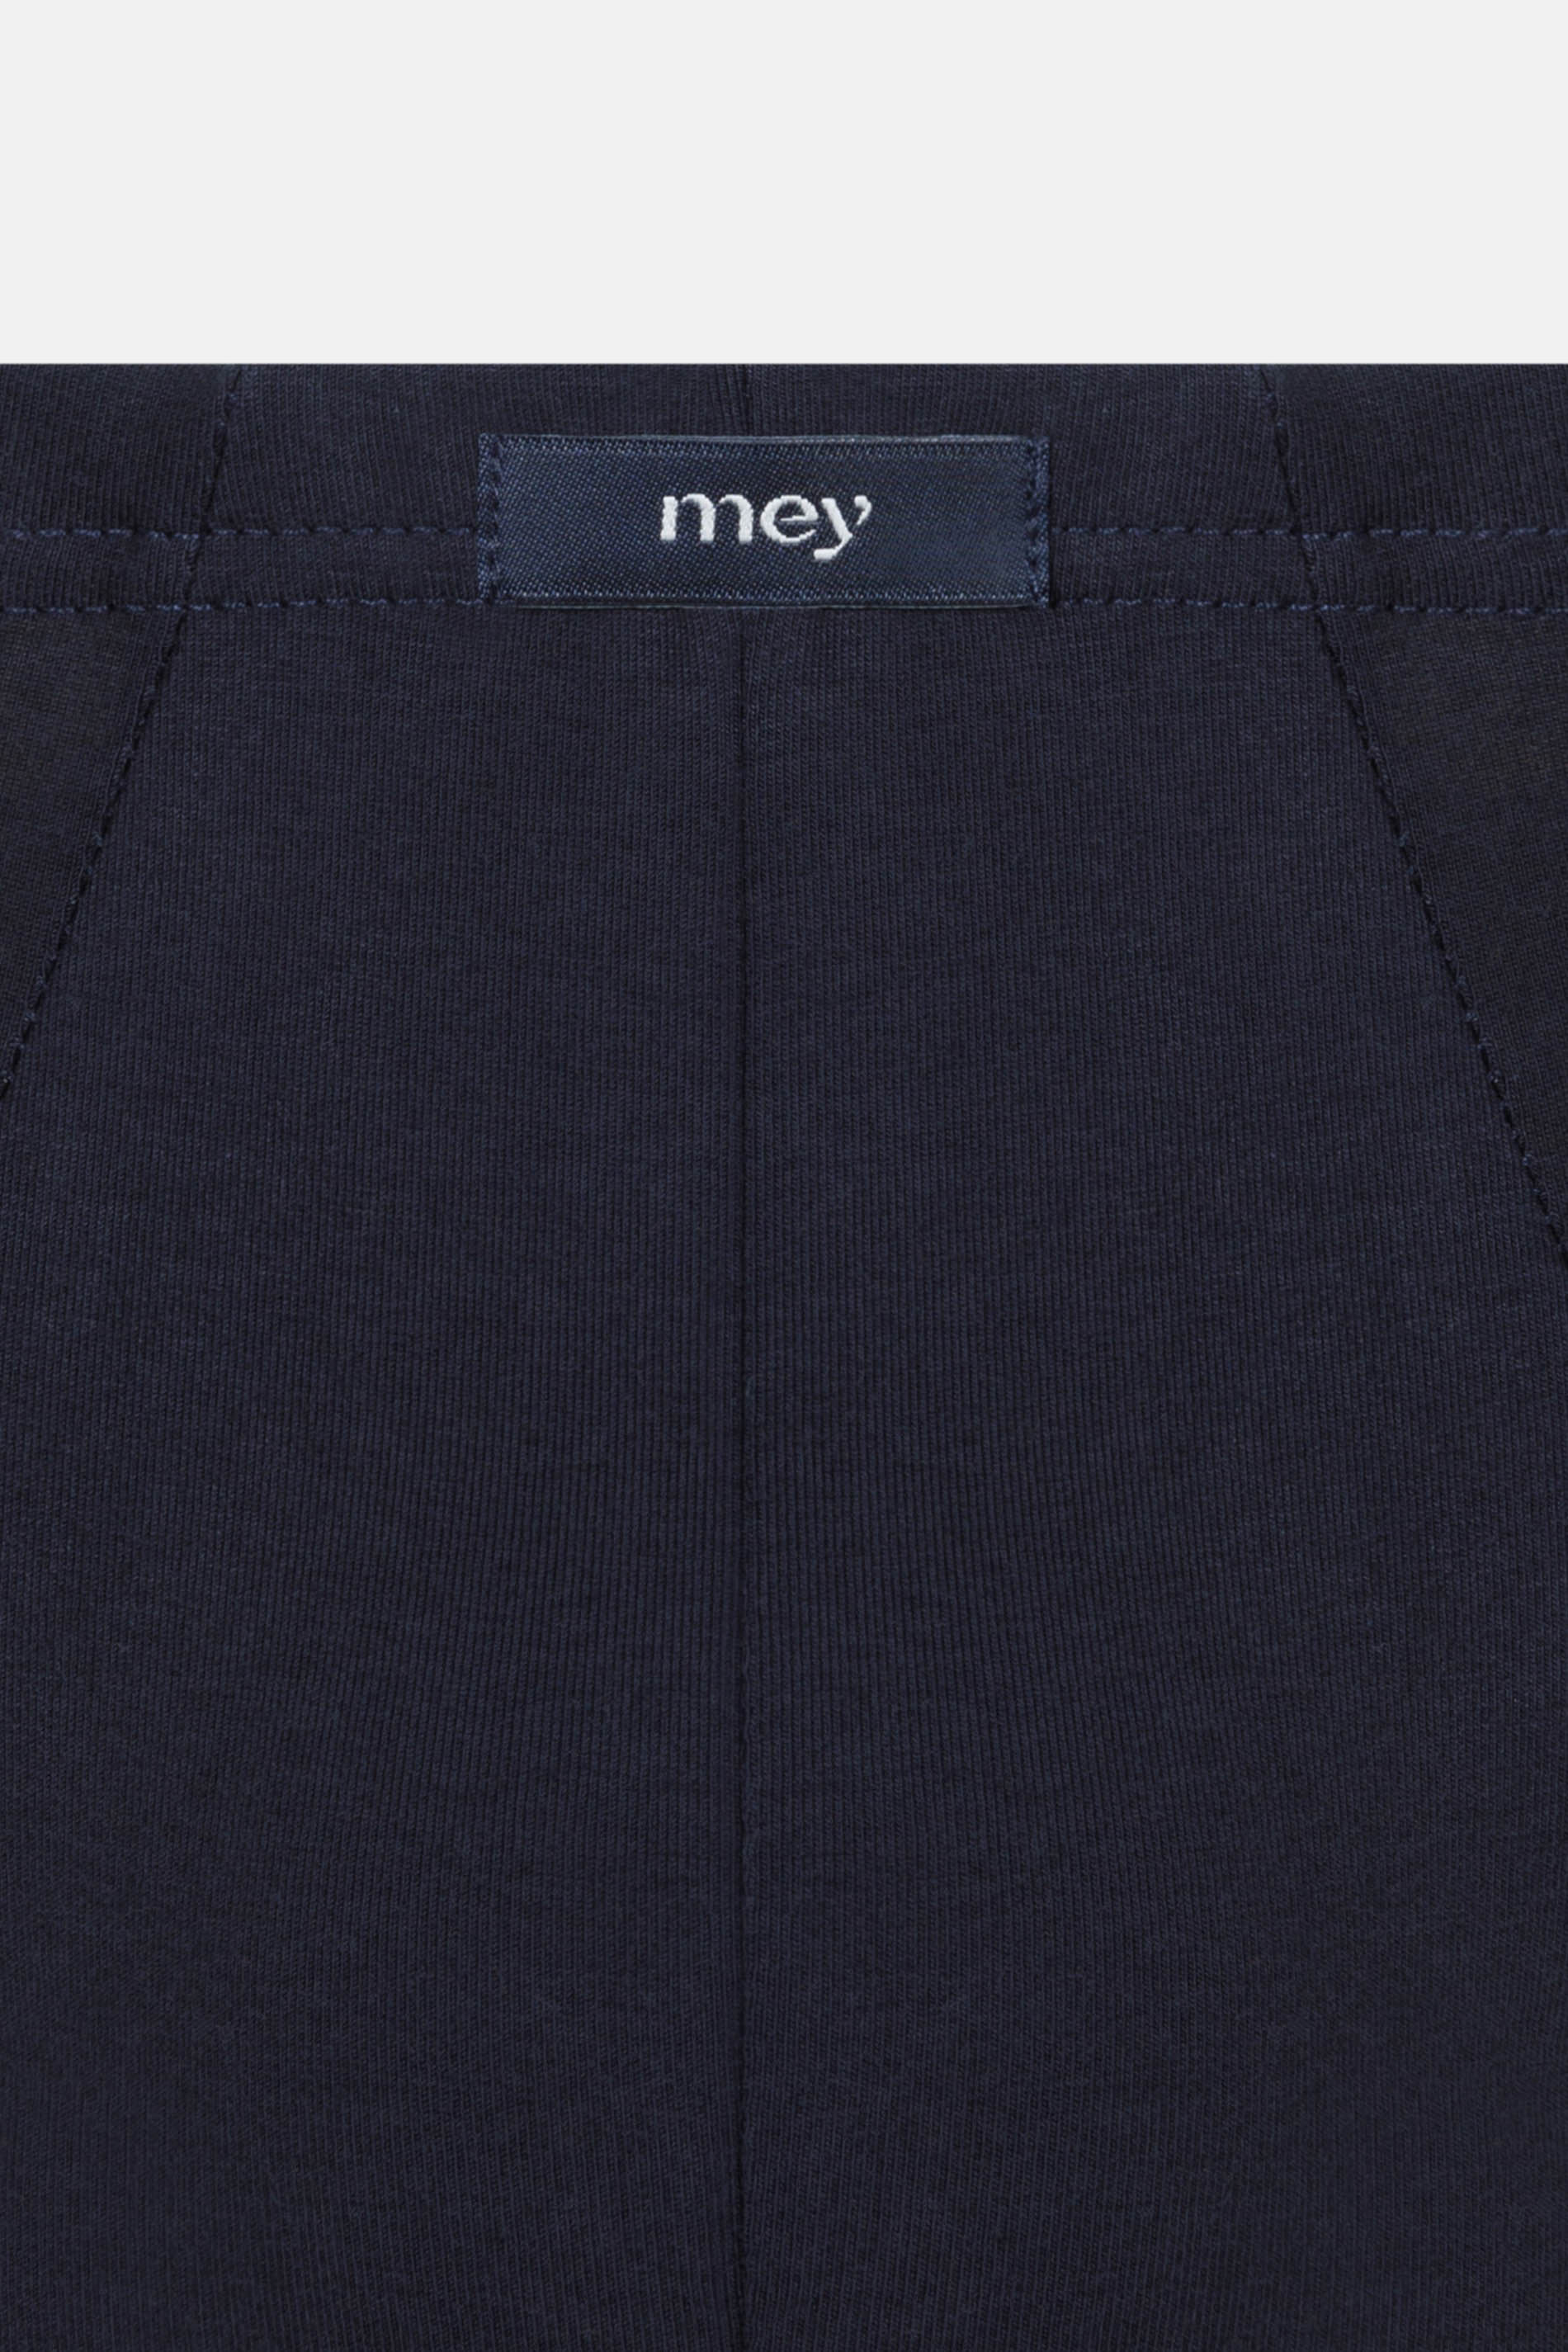 | Shorty Serie blue blau Doppelpack Farbe Jersey mey® |